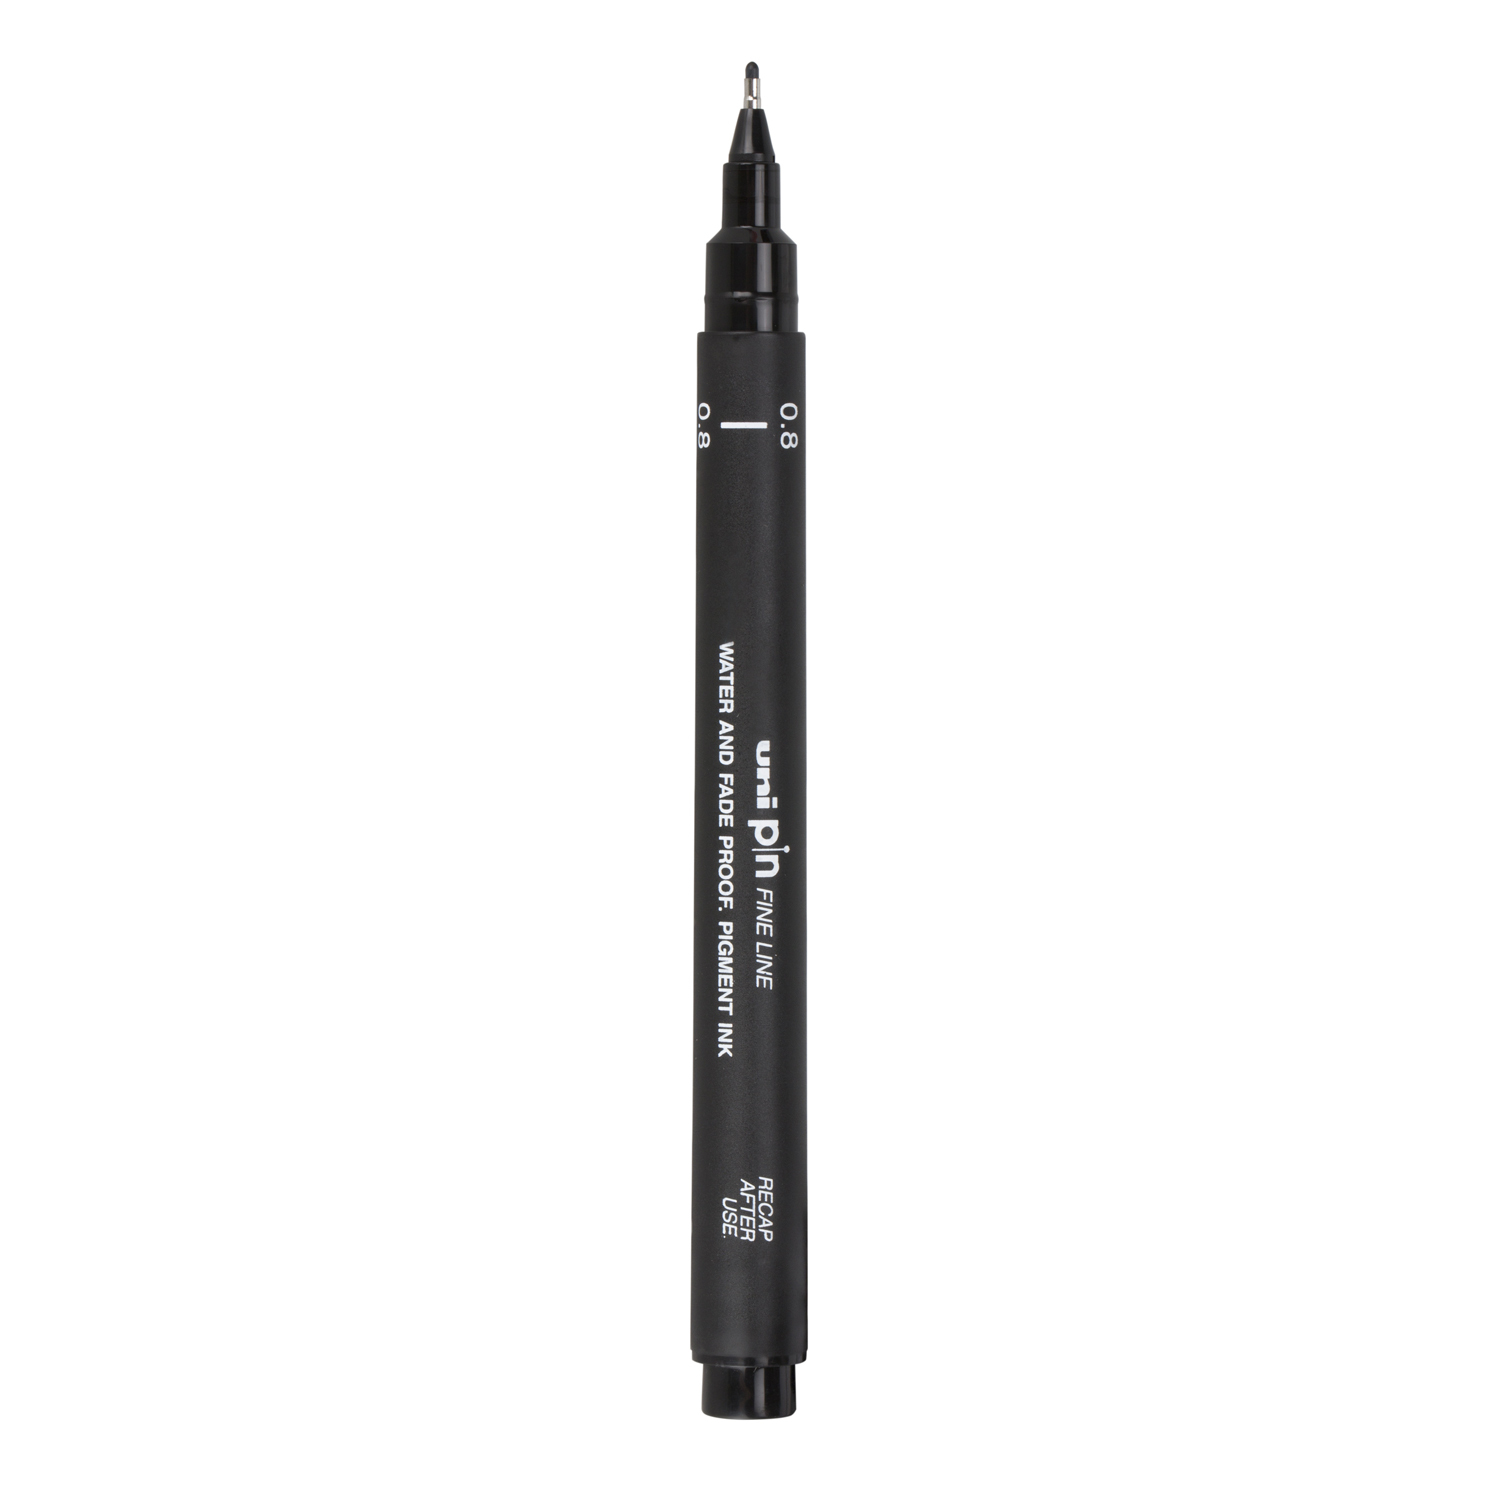 Uniball Pin Fine Liner Drawing Pen - Black / 0.8mm Image 2